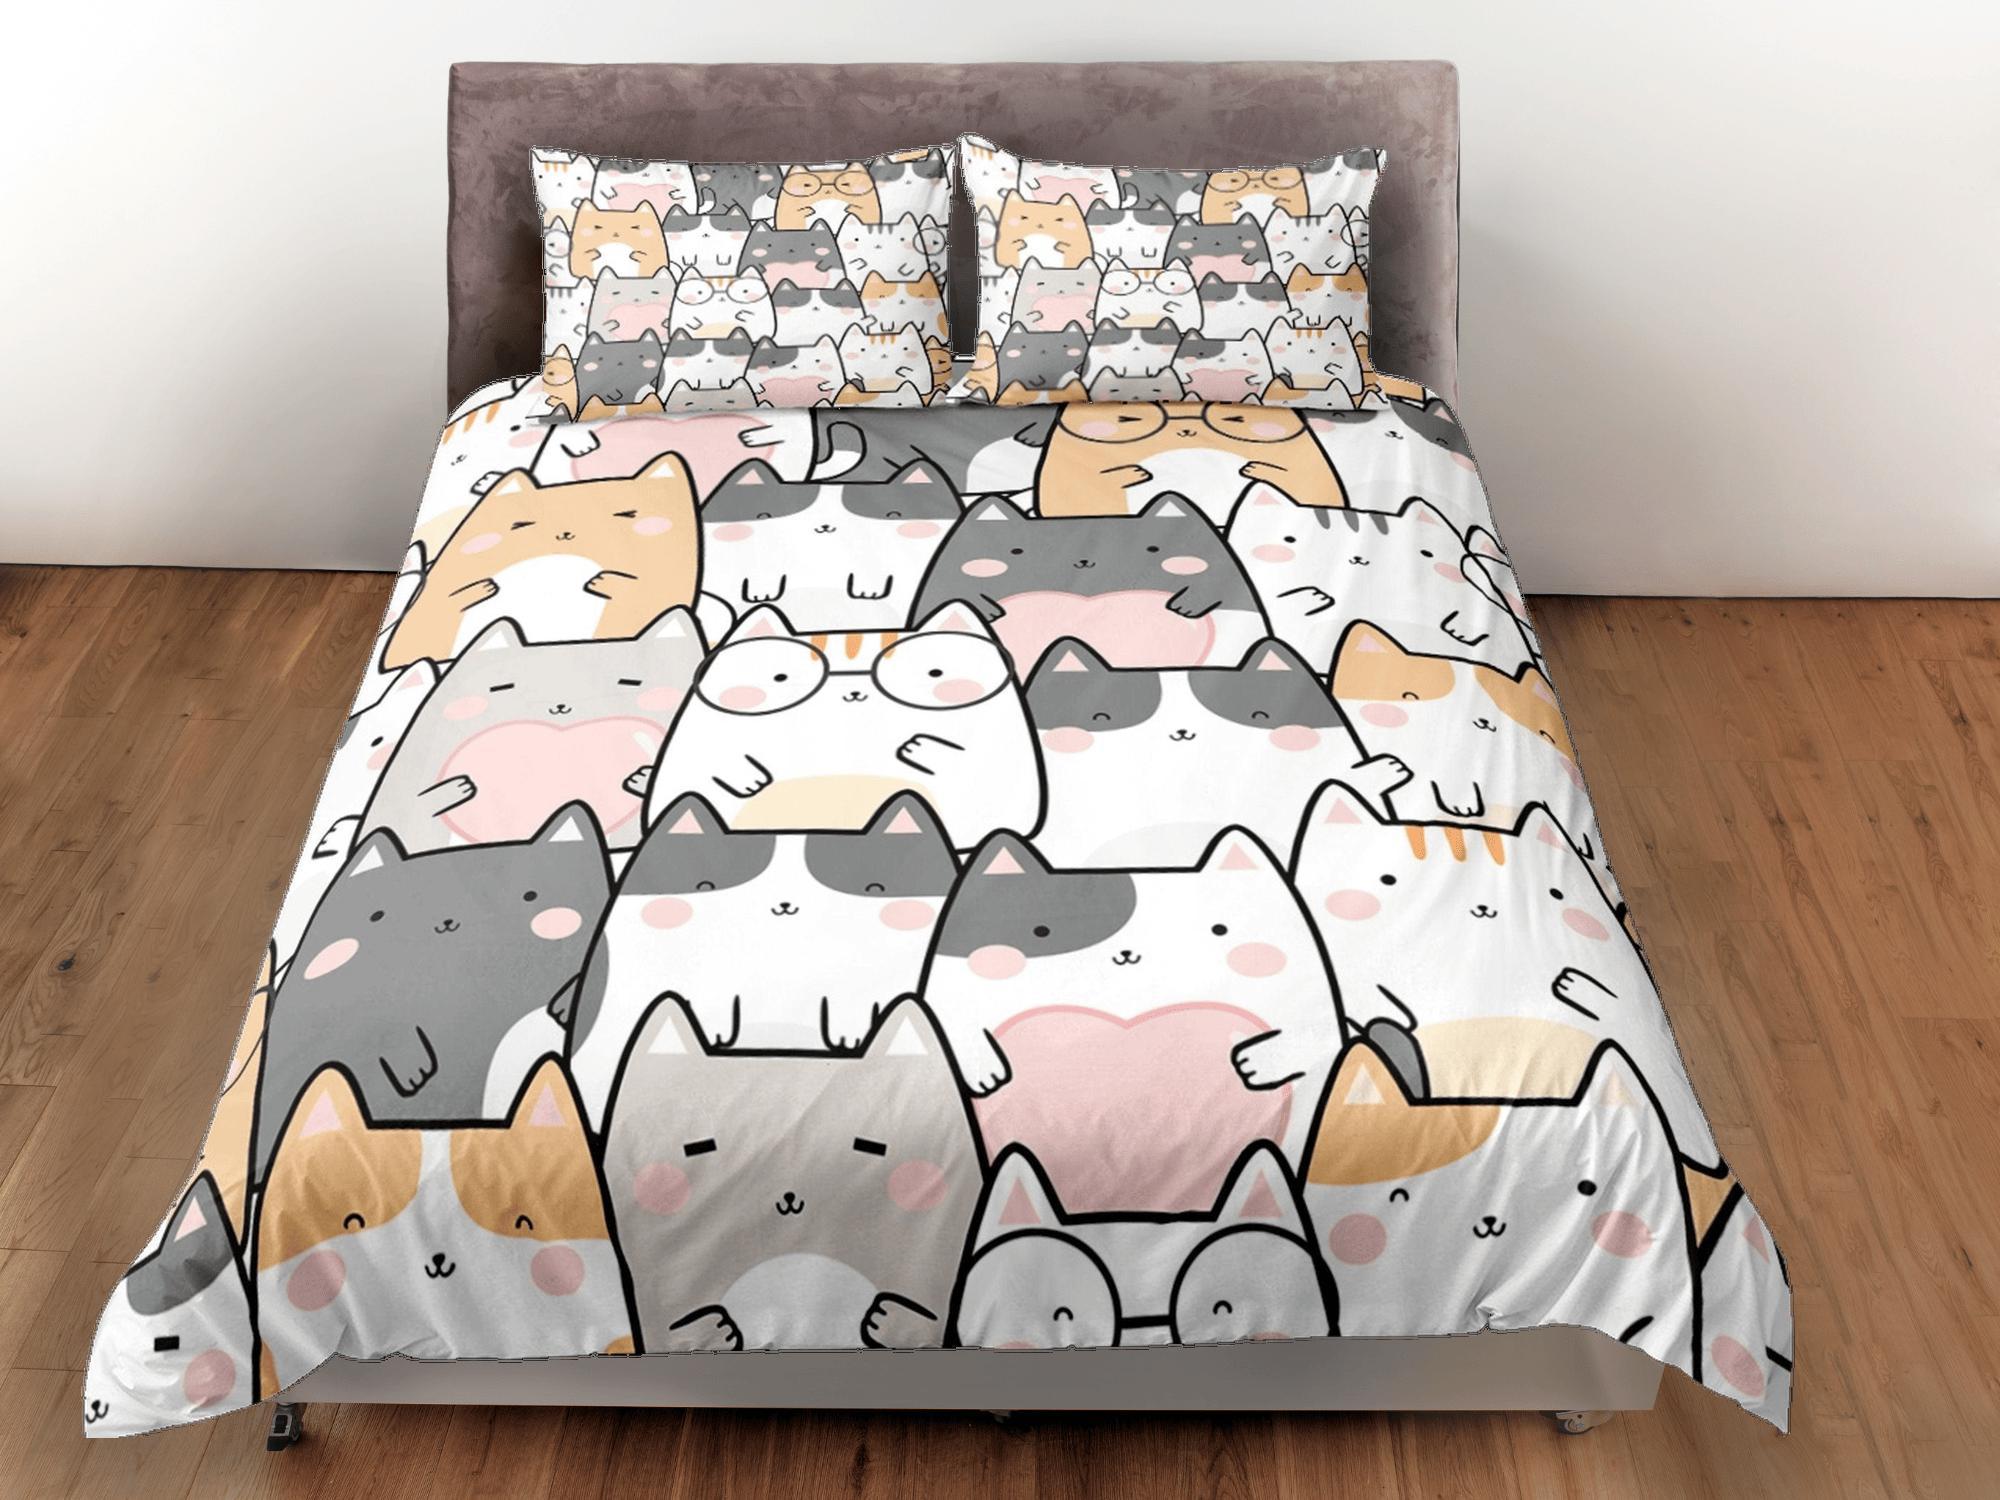 daintyduvet Kawaii Cats Duvet Cover Set Bedspread Cute Bedding for Teens Kids Bedroom Bed Cover Cat Lover Gift